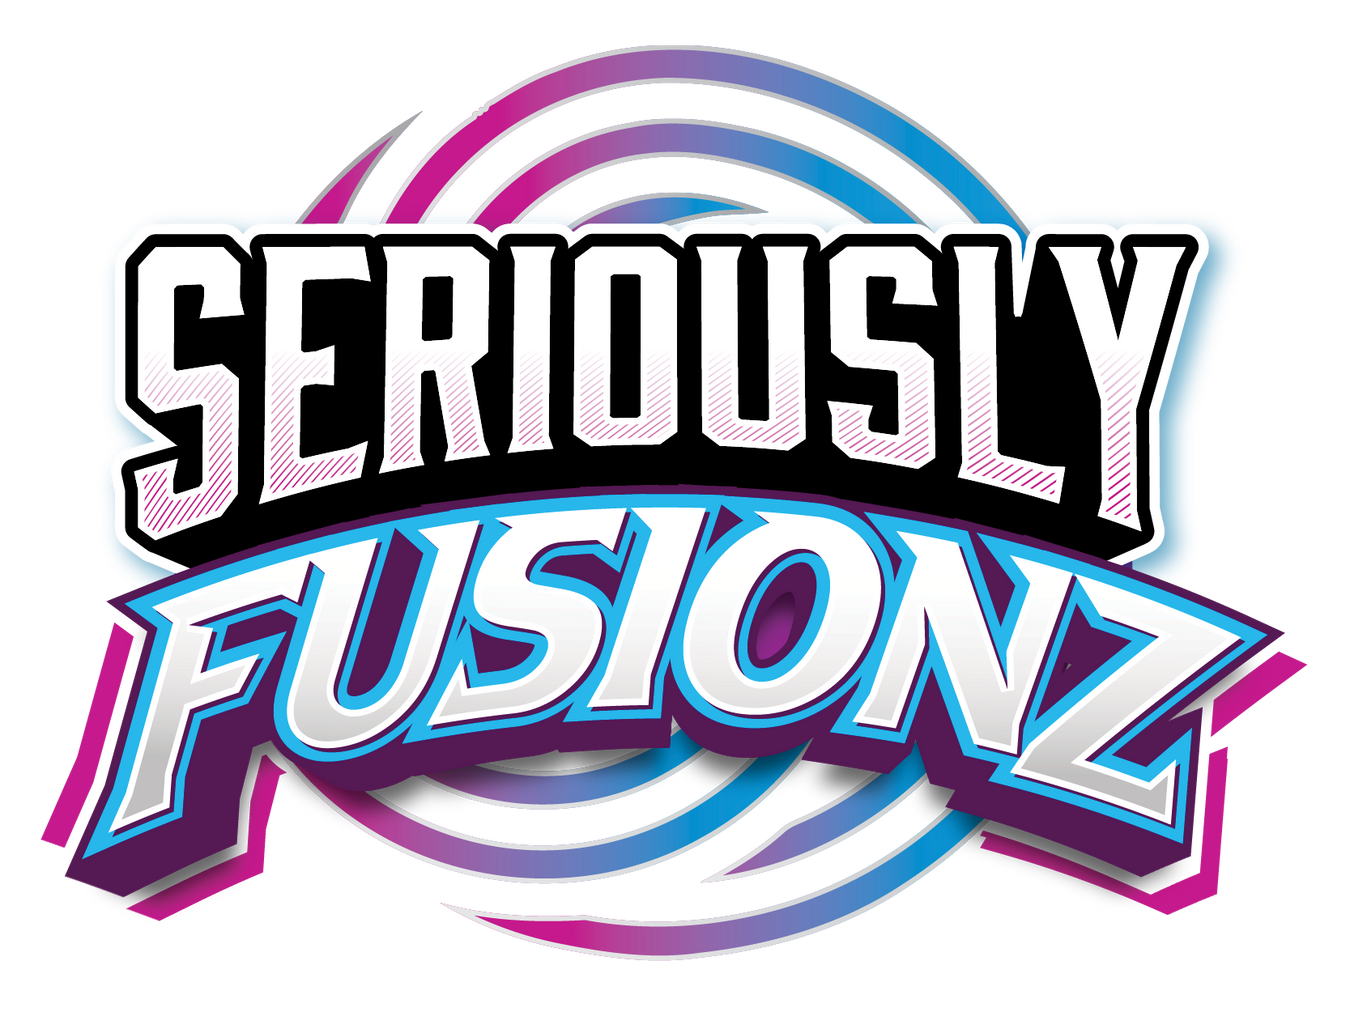 Seriously Fusionz By Doozy Vape